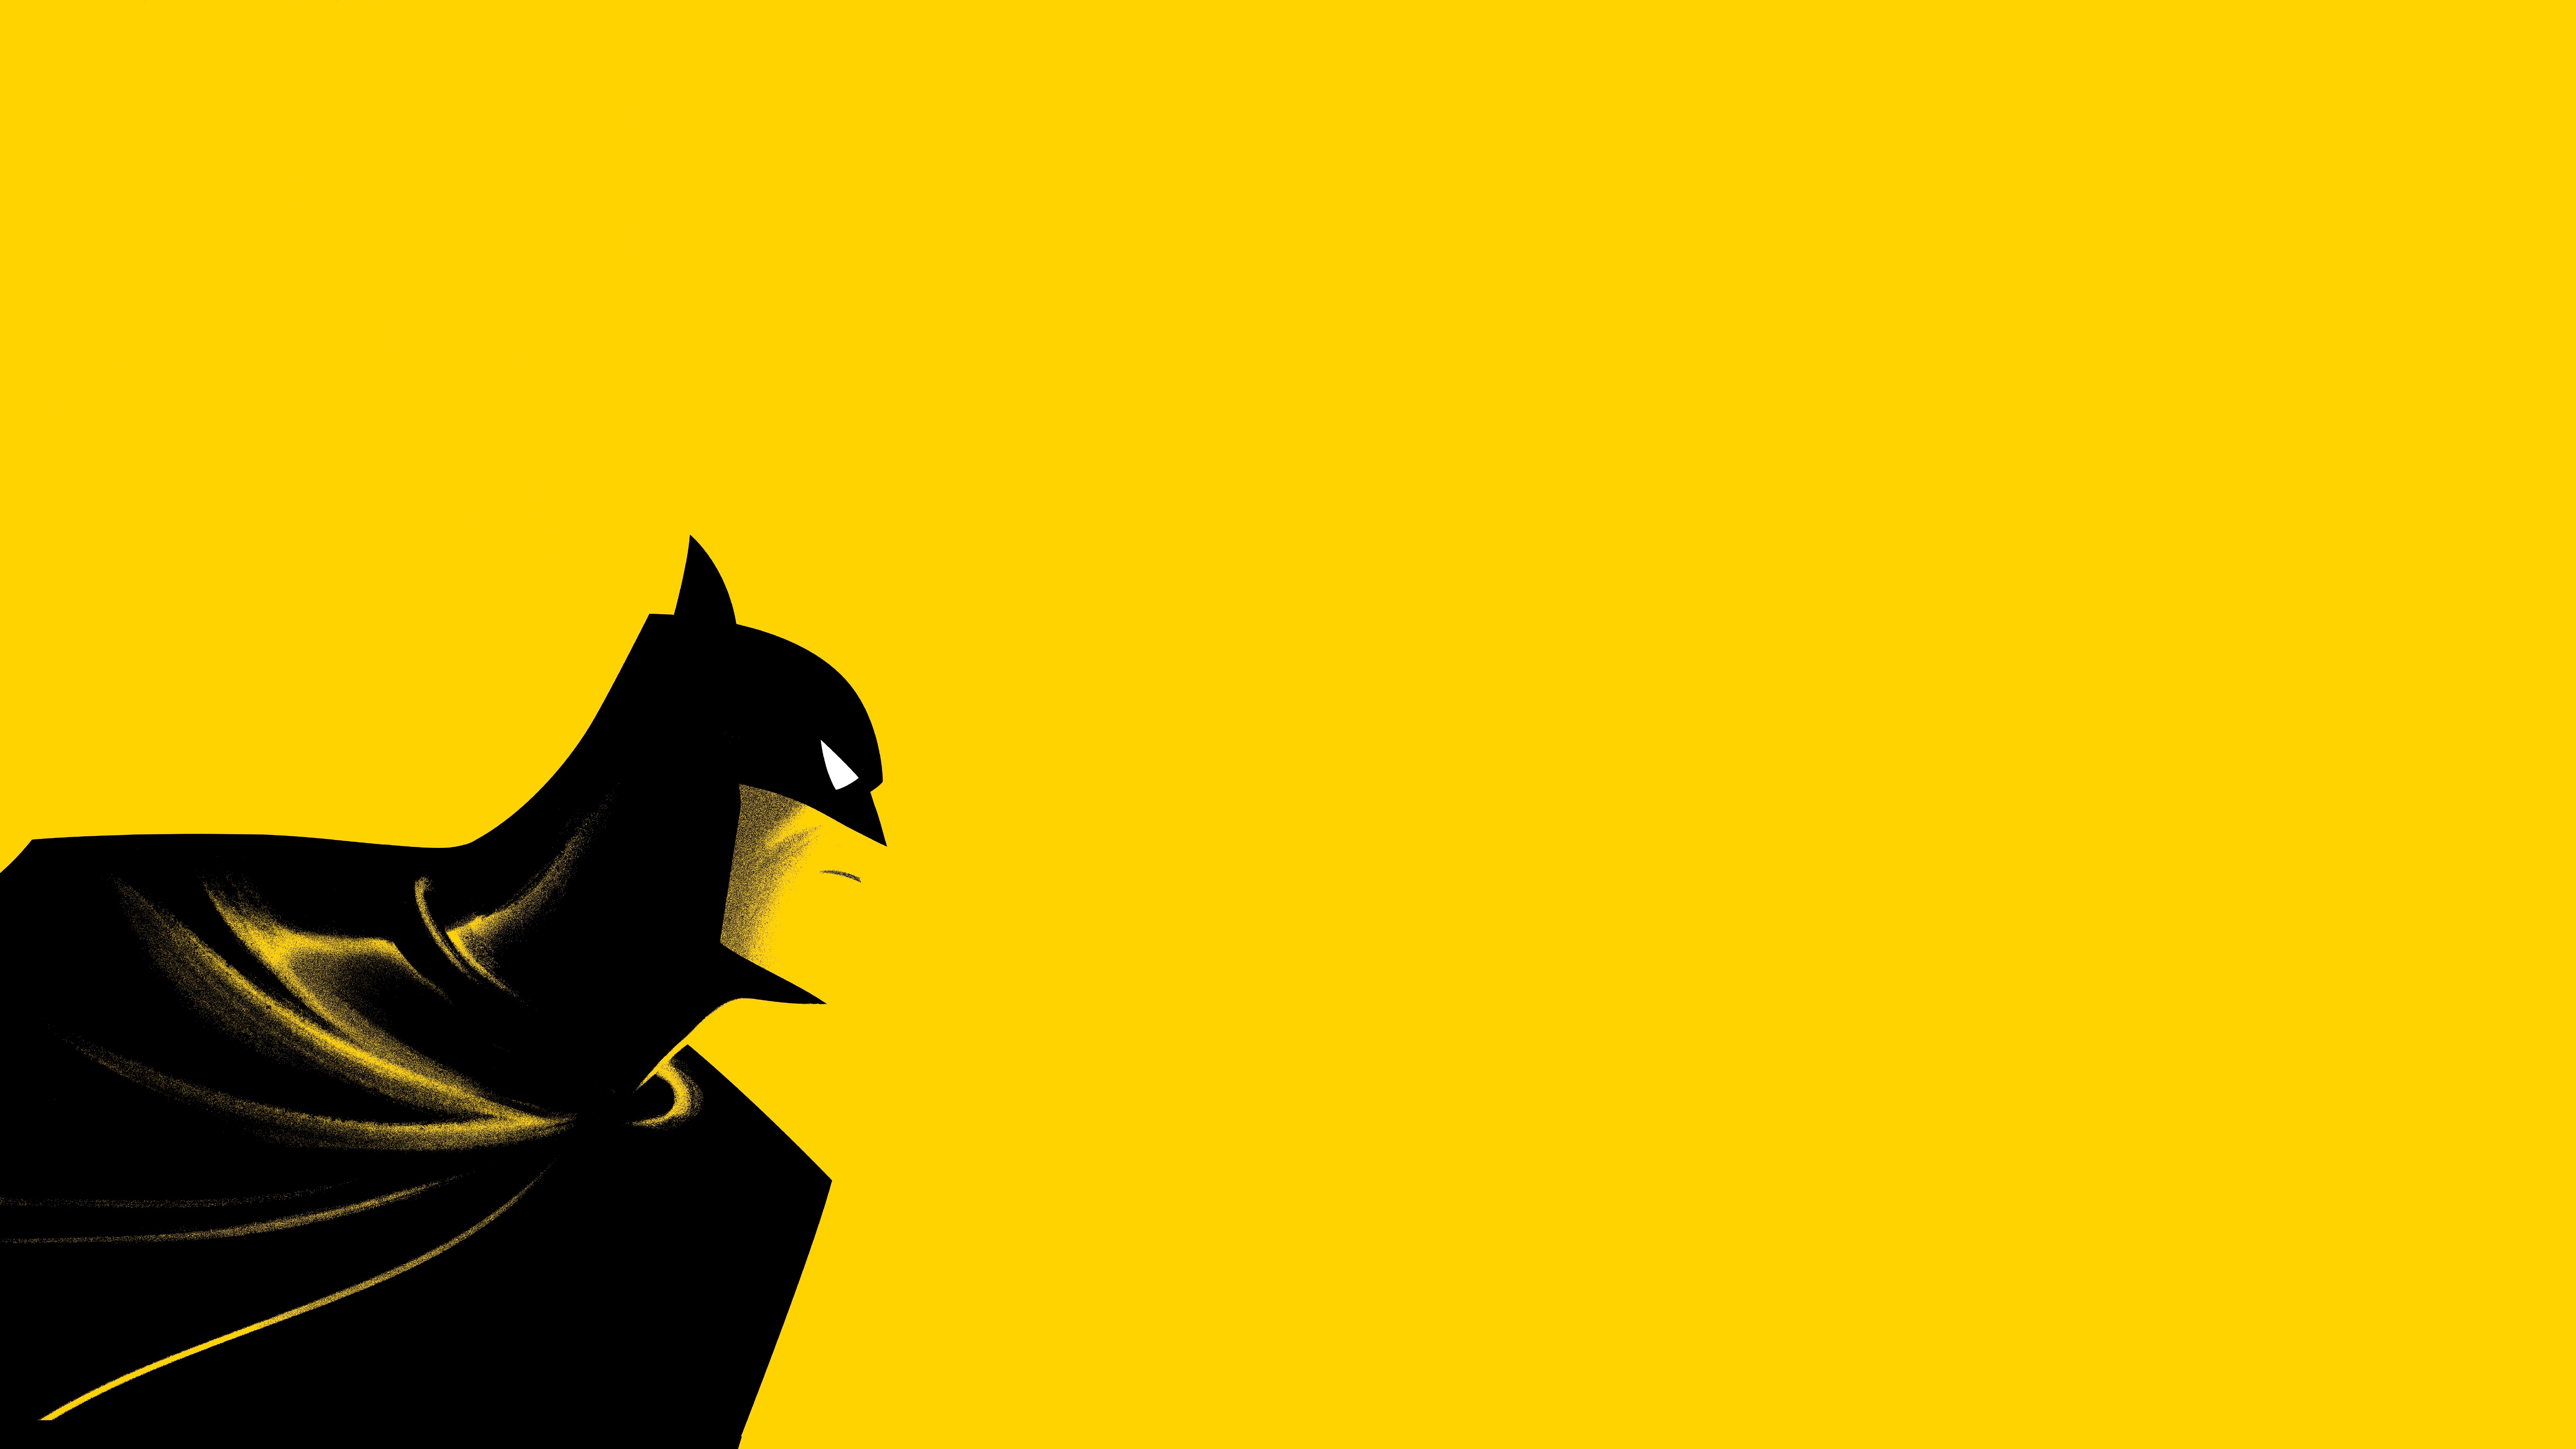 TV Show Batman: The Animated Series 4k Ultra HD Wallpaper by Phantom City Creative